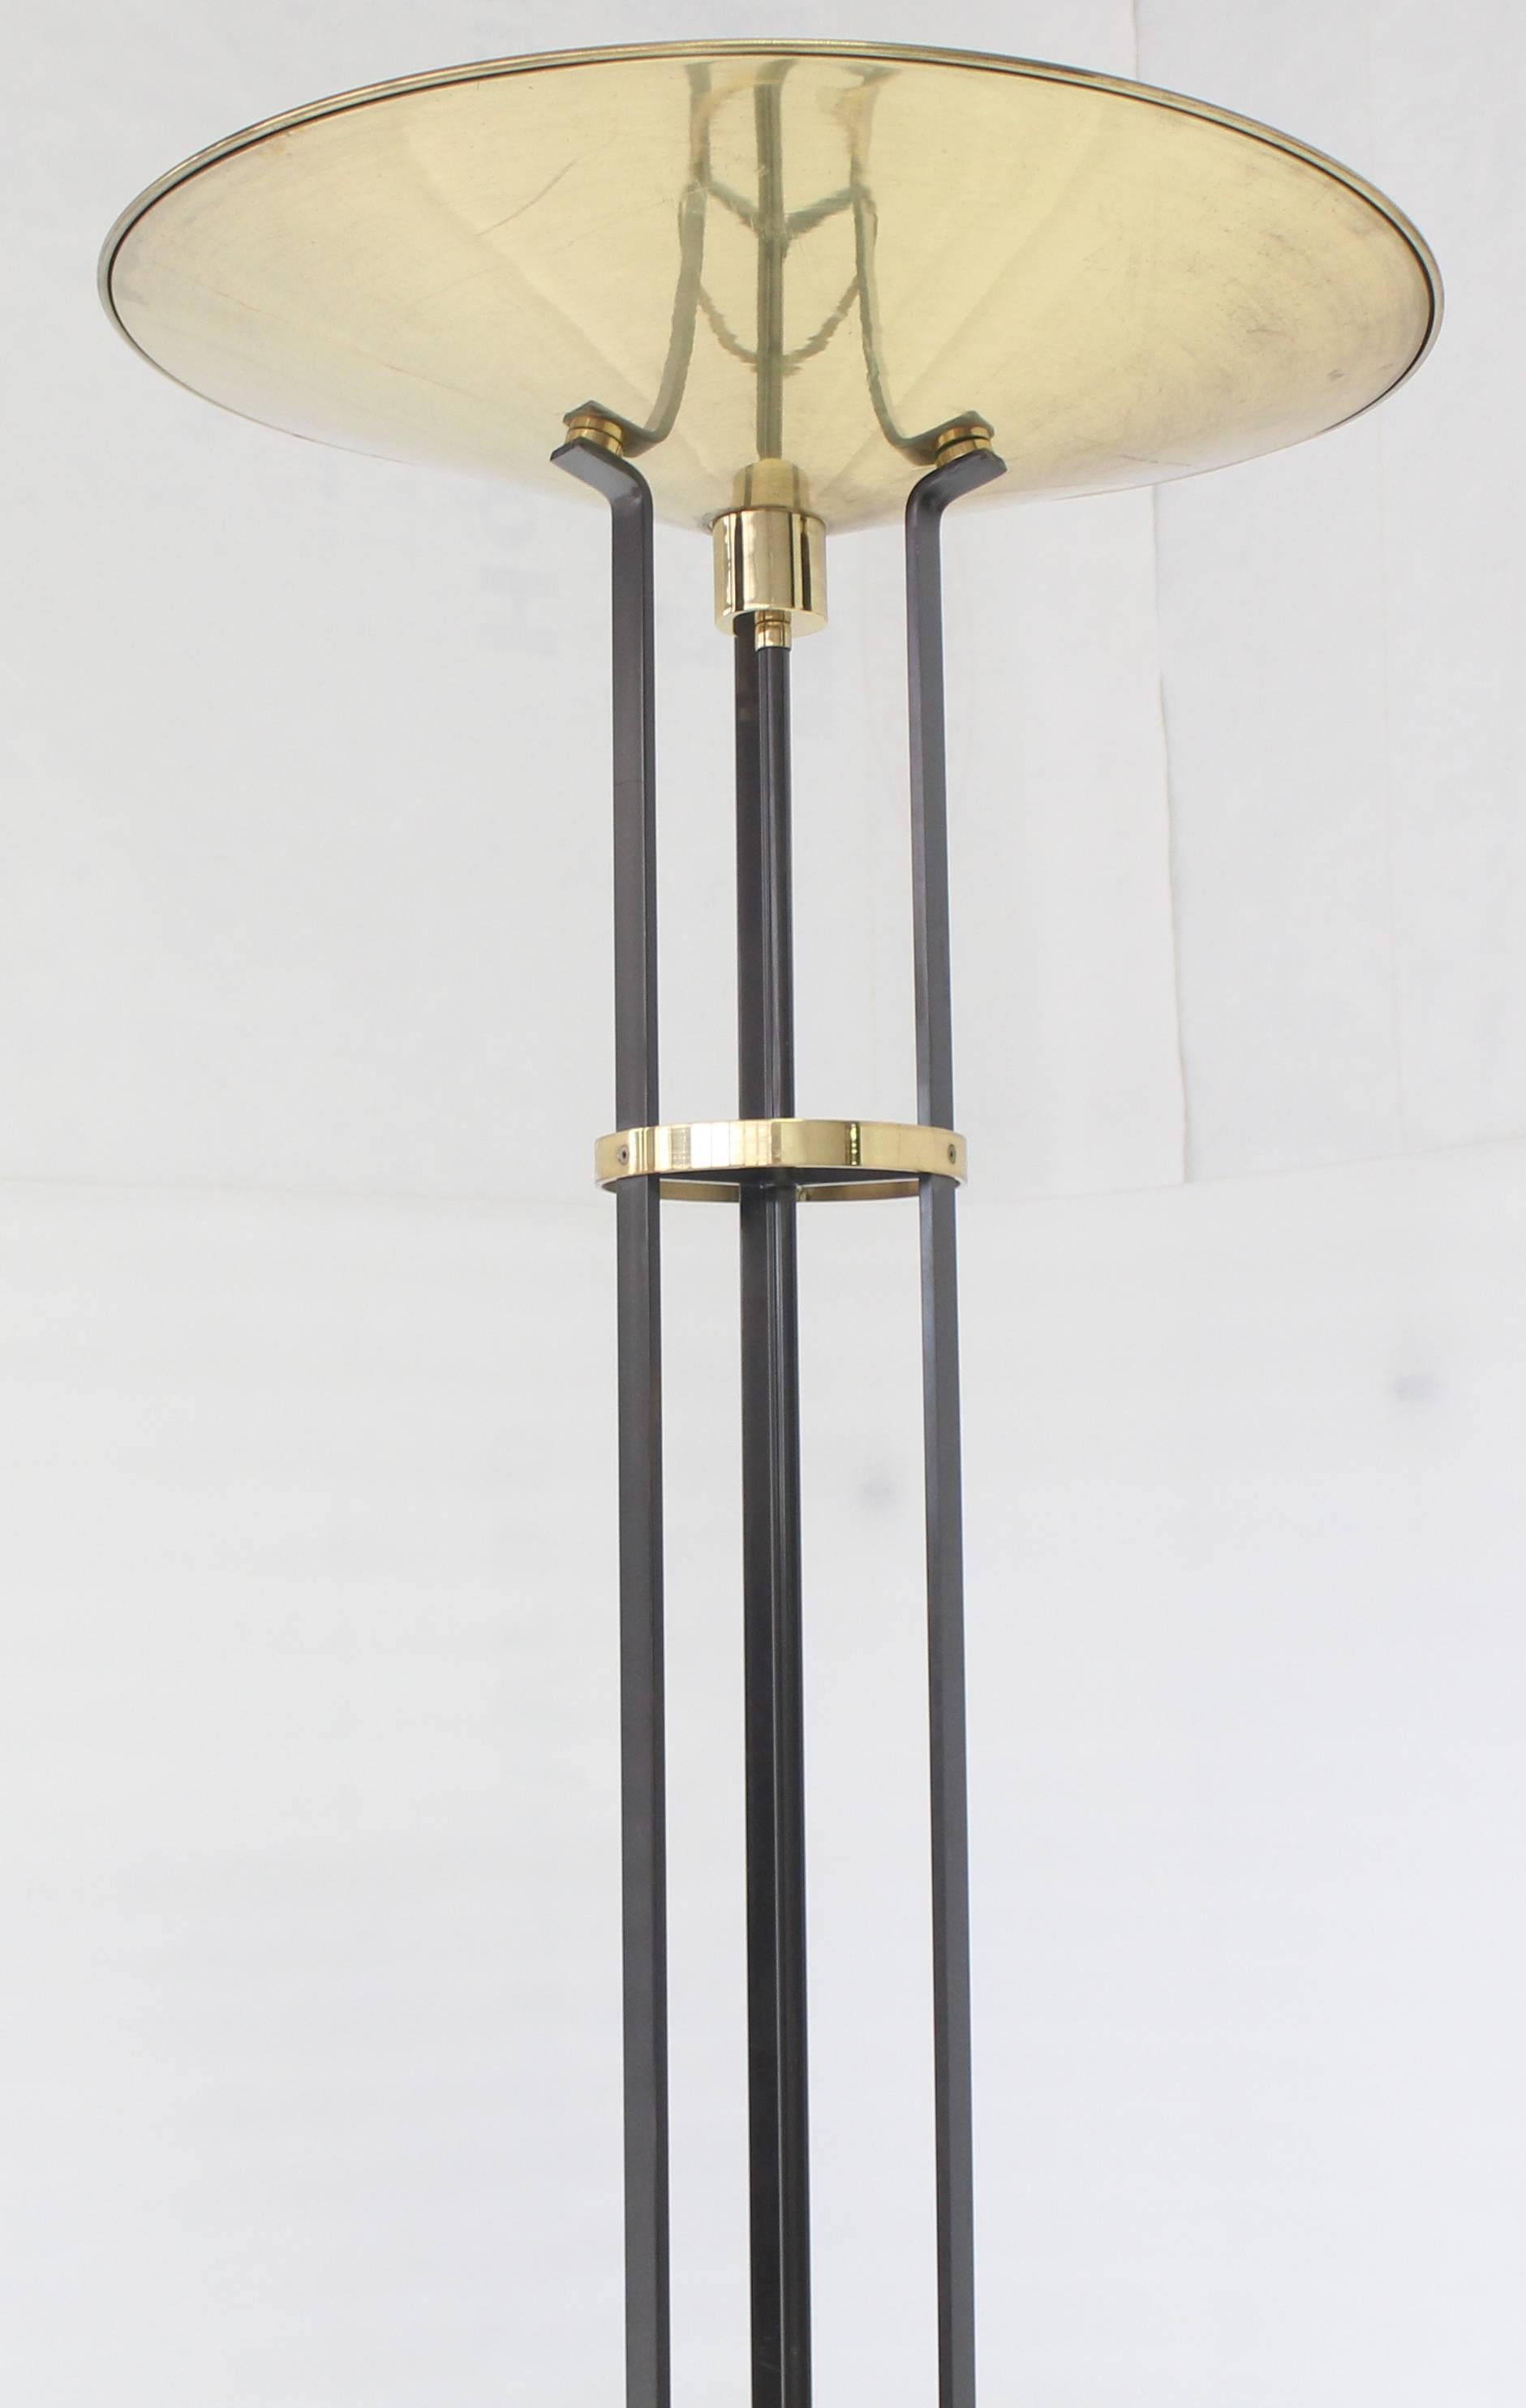 Mid-Century Modern Italian brass torchere floor lamp on tripod base with dimmer.